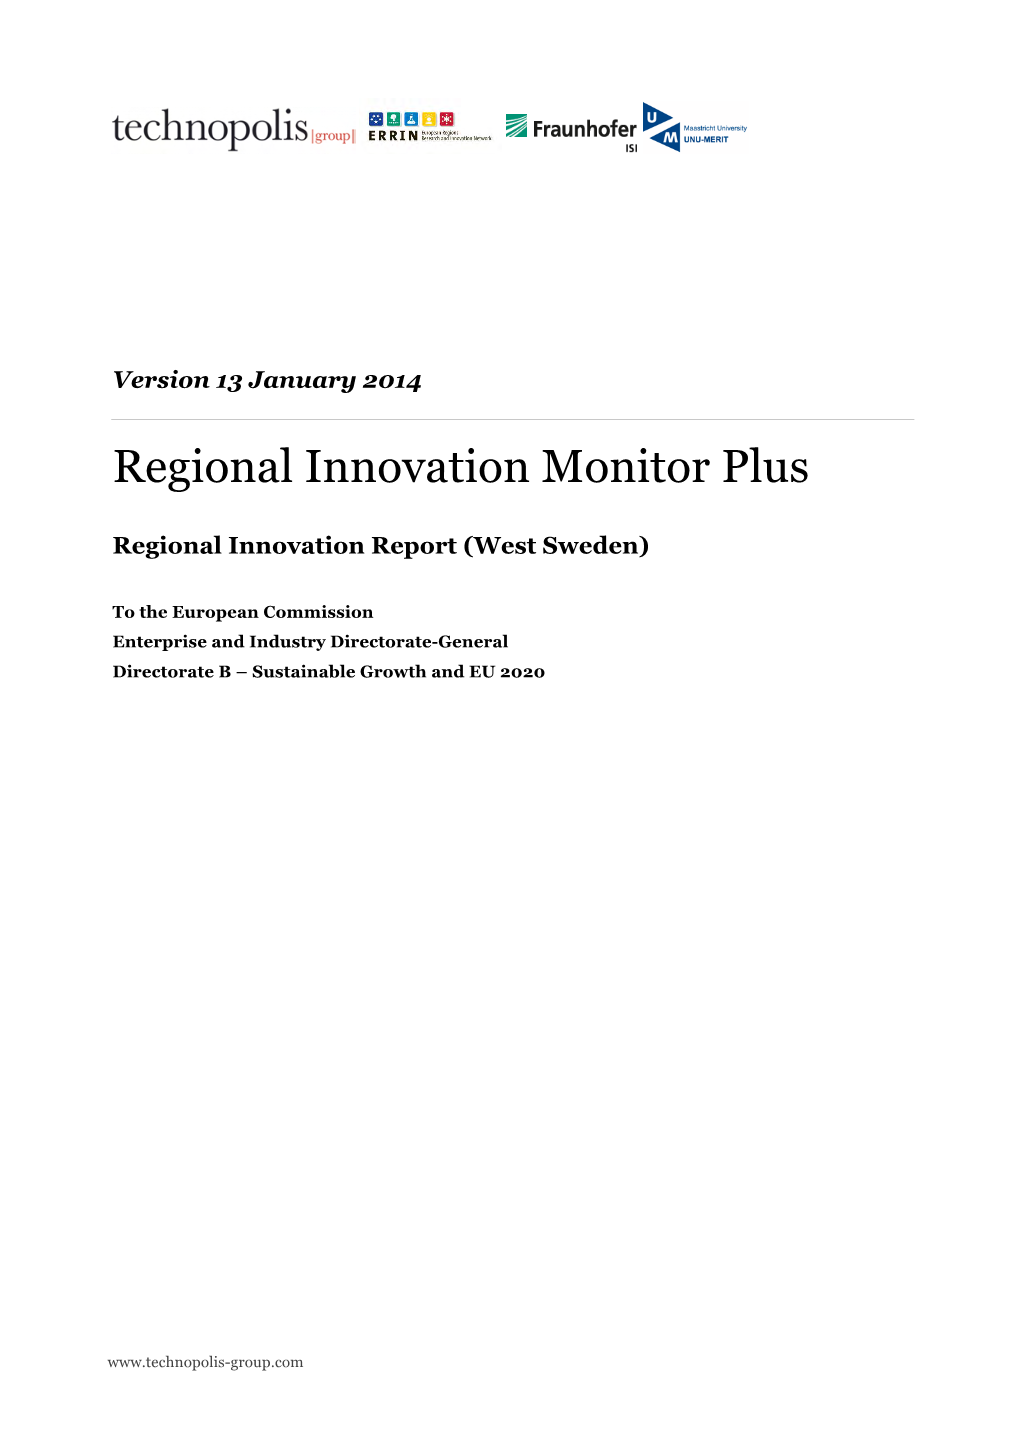 Regional Innovation Report (West Sweden)